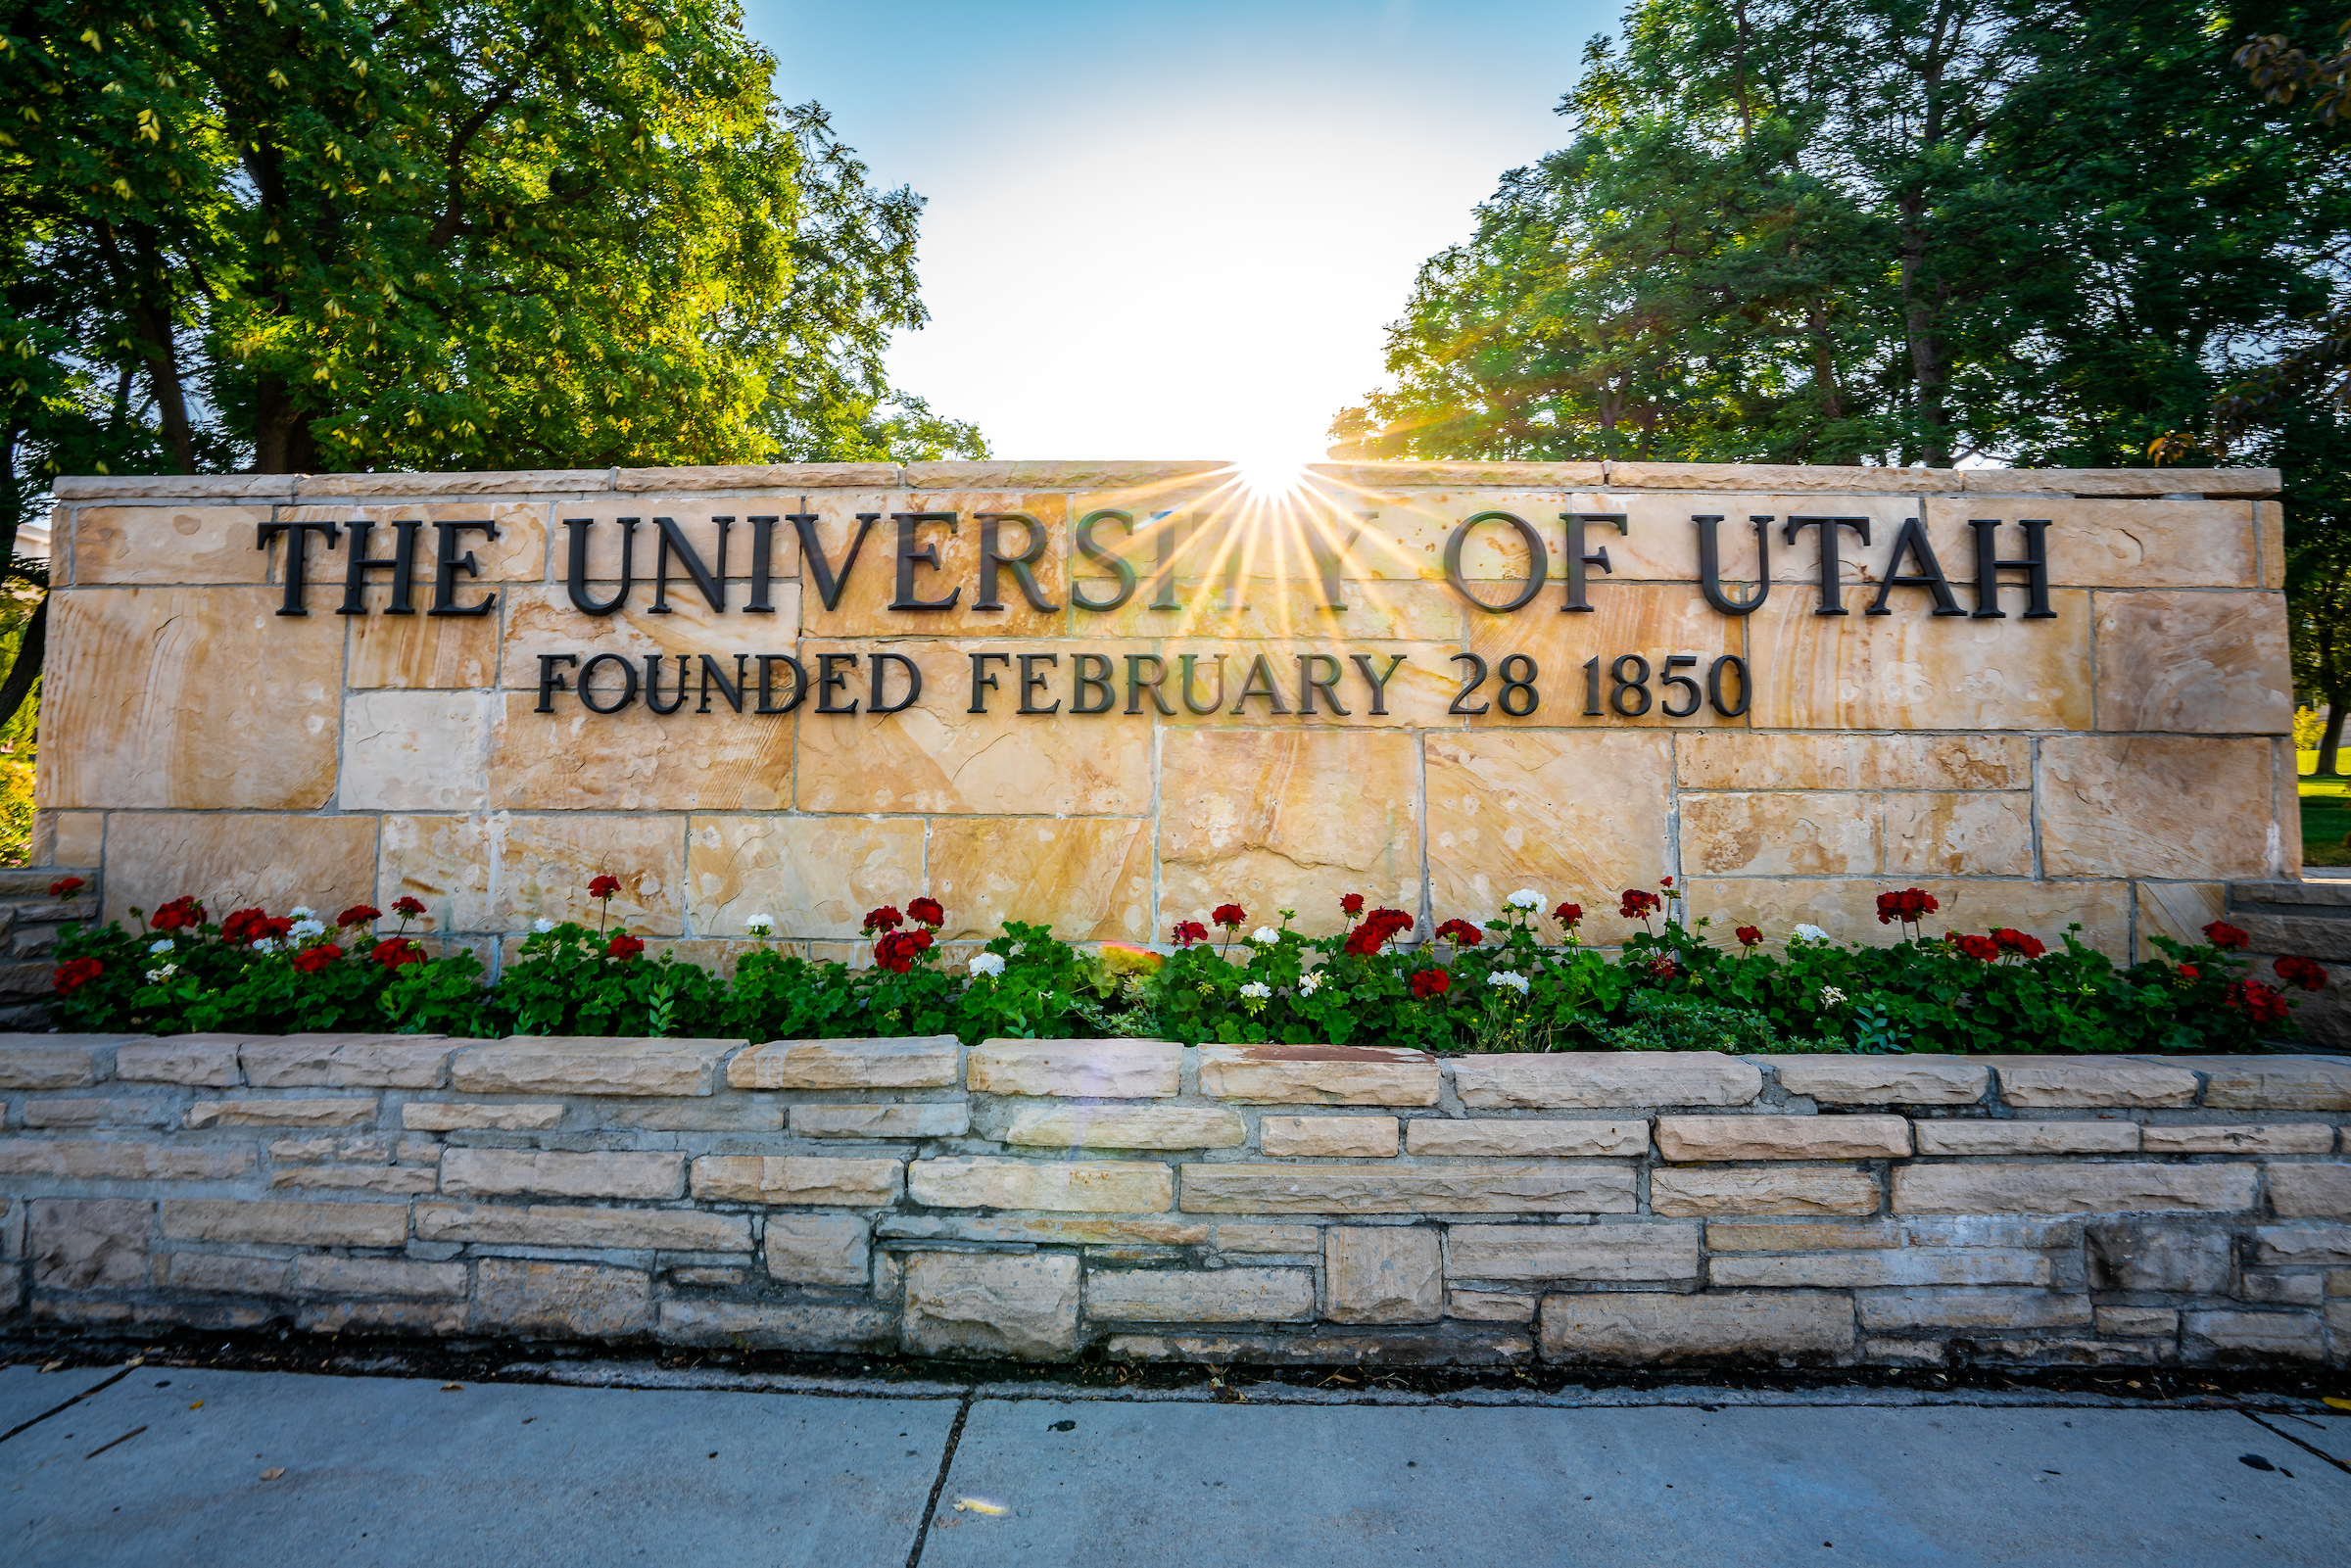 Why The University of Utah?